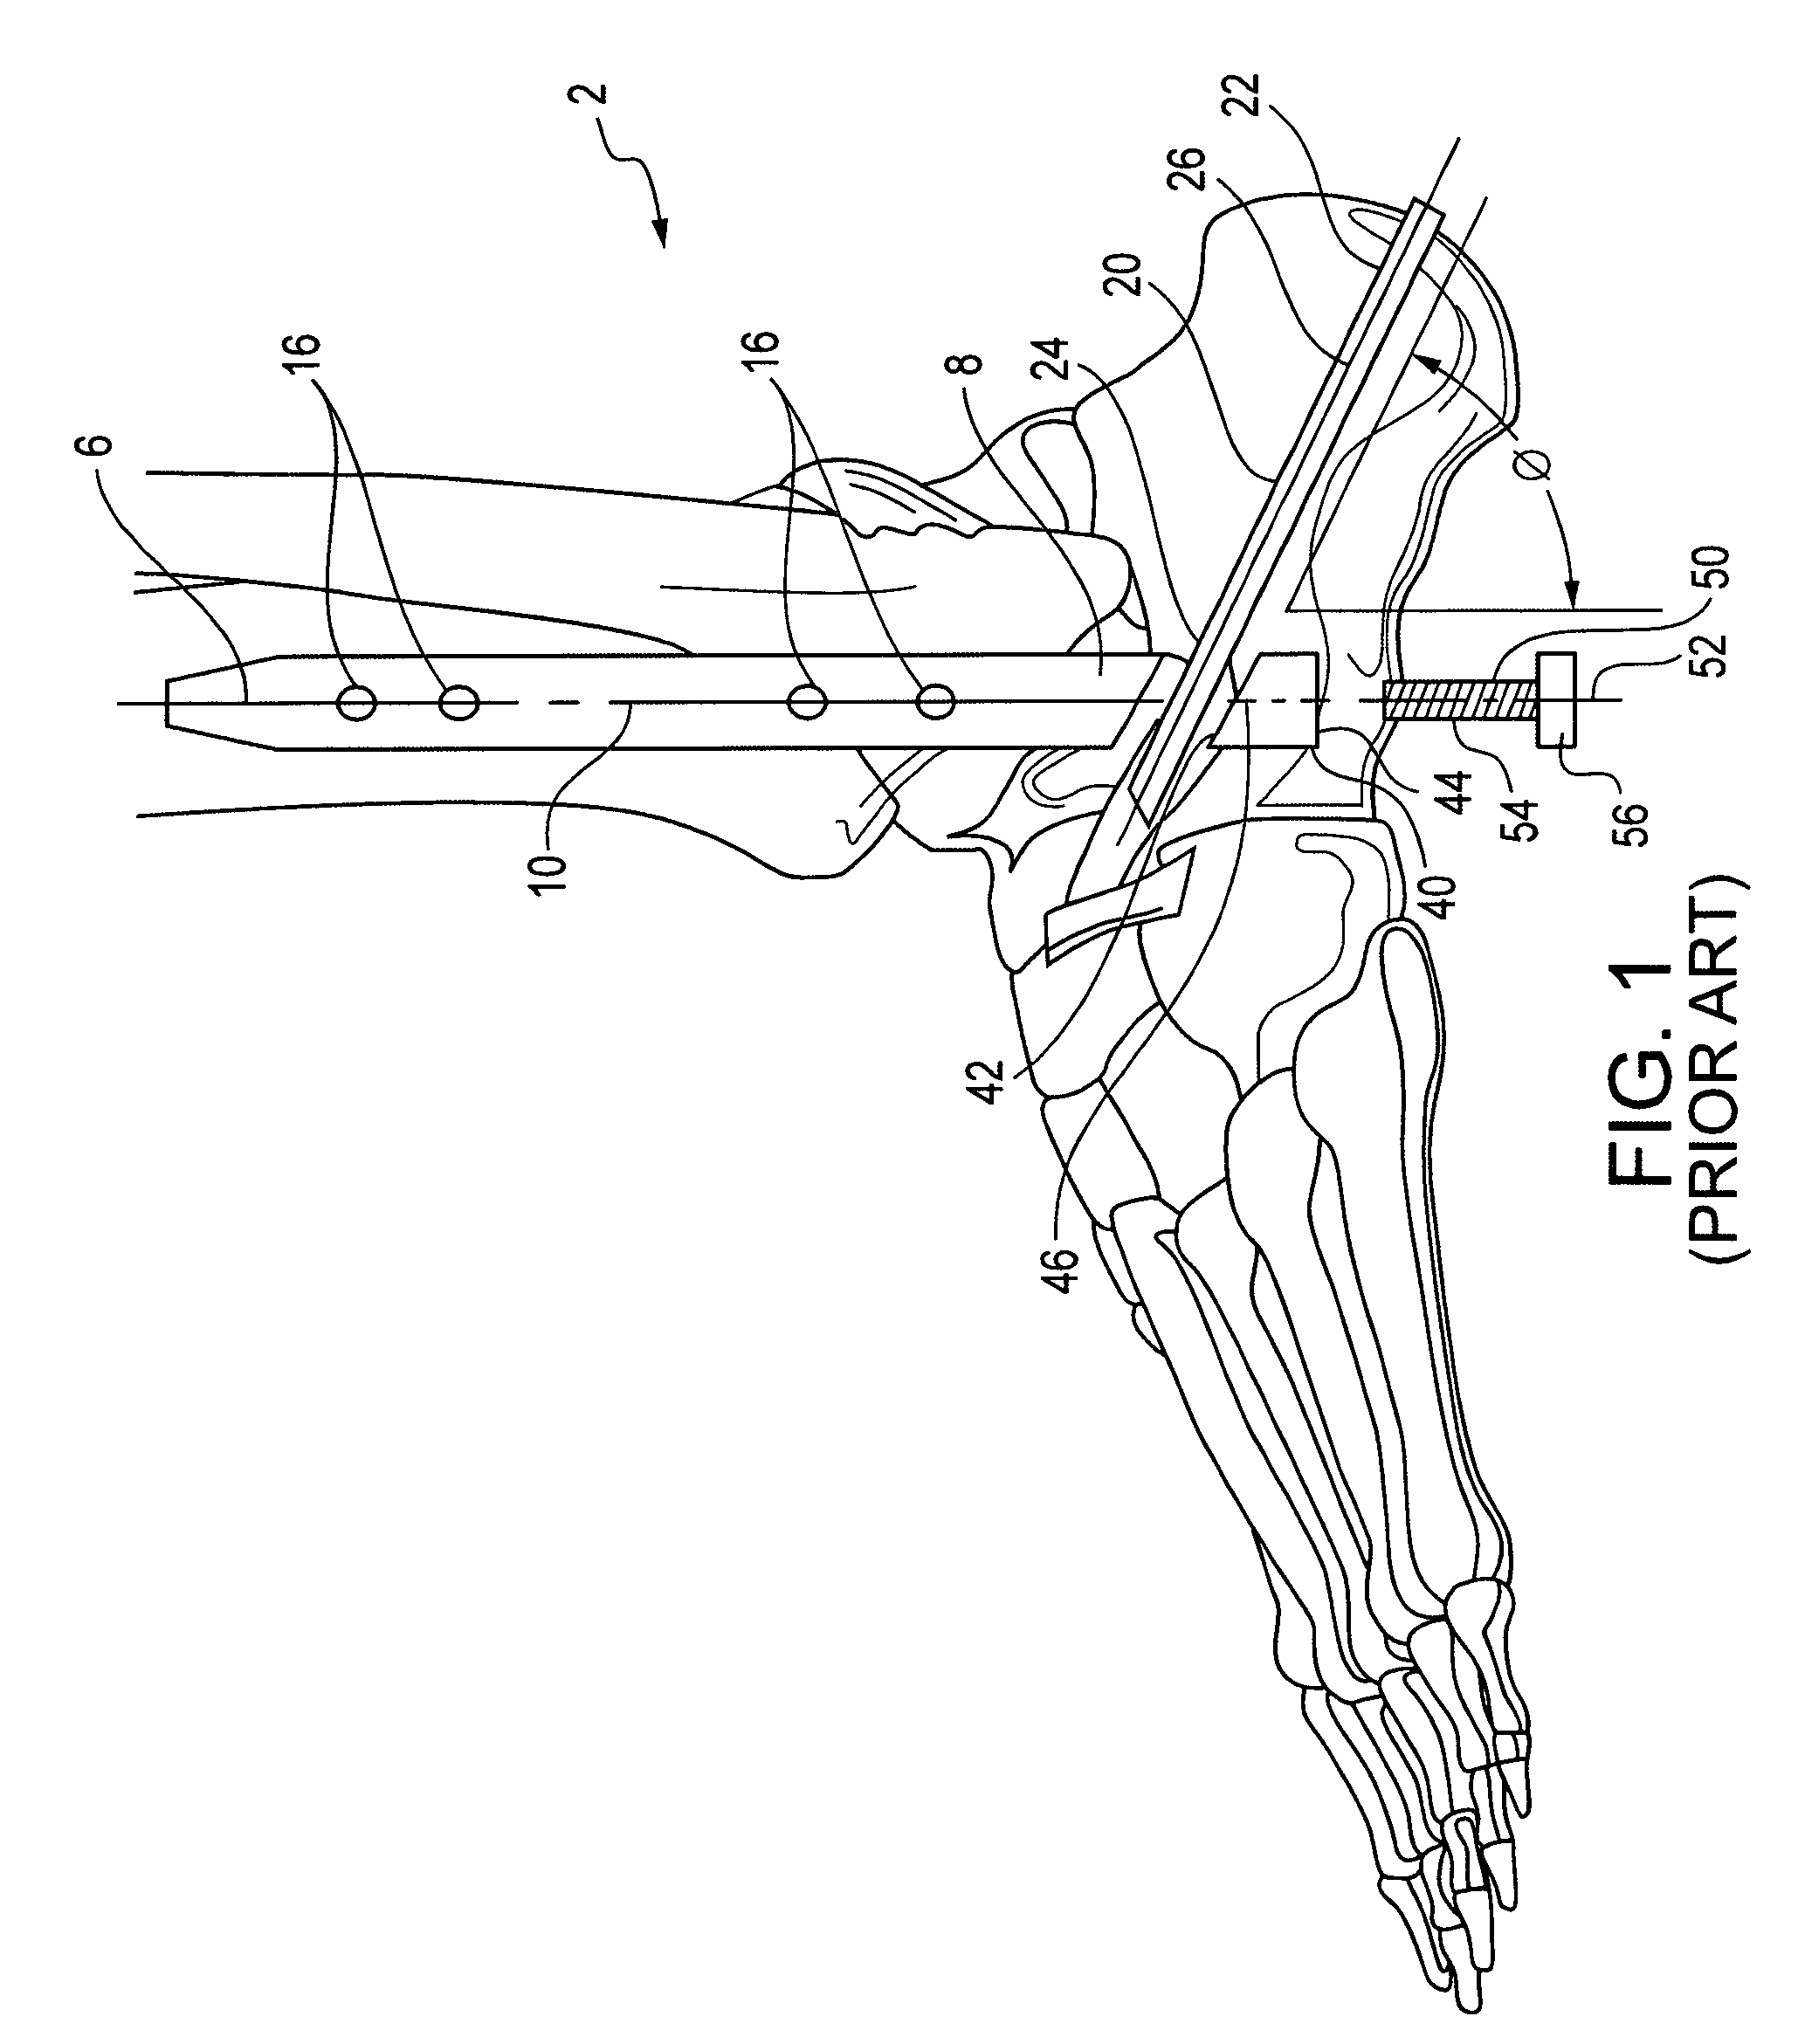 Modular, blade-rod, intramedullary fixation device